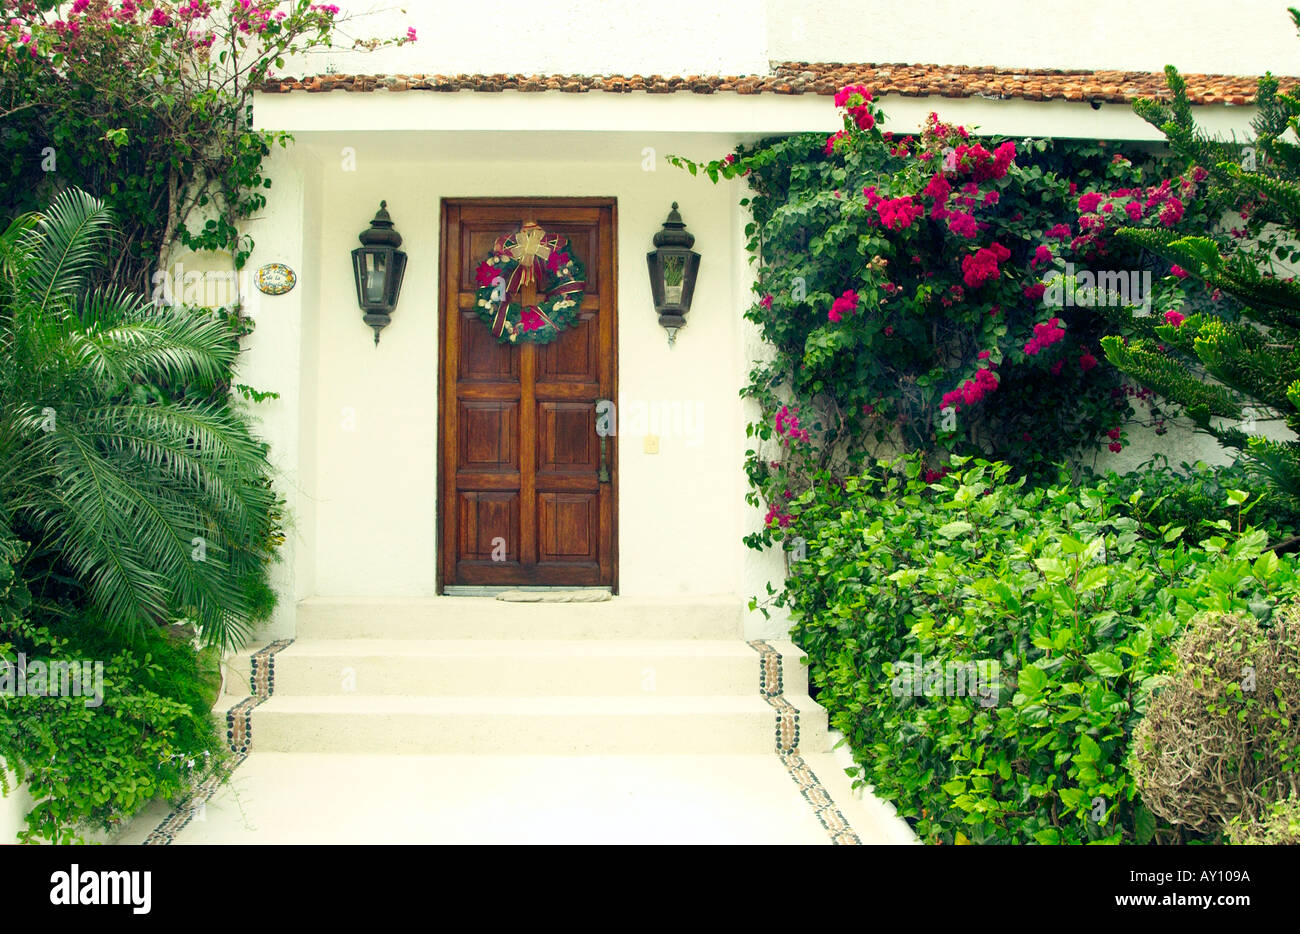 A Christmas wreath adorns the entrance door to a home in Cozumel Mexico Stock Photo